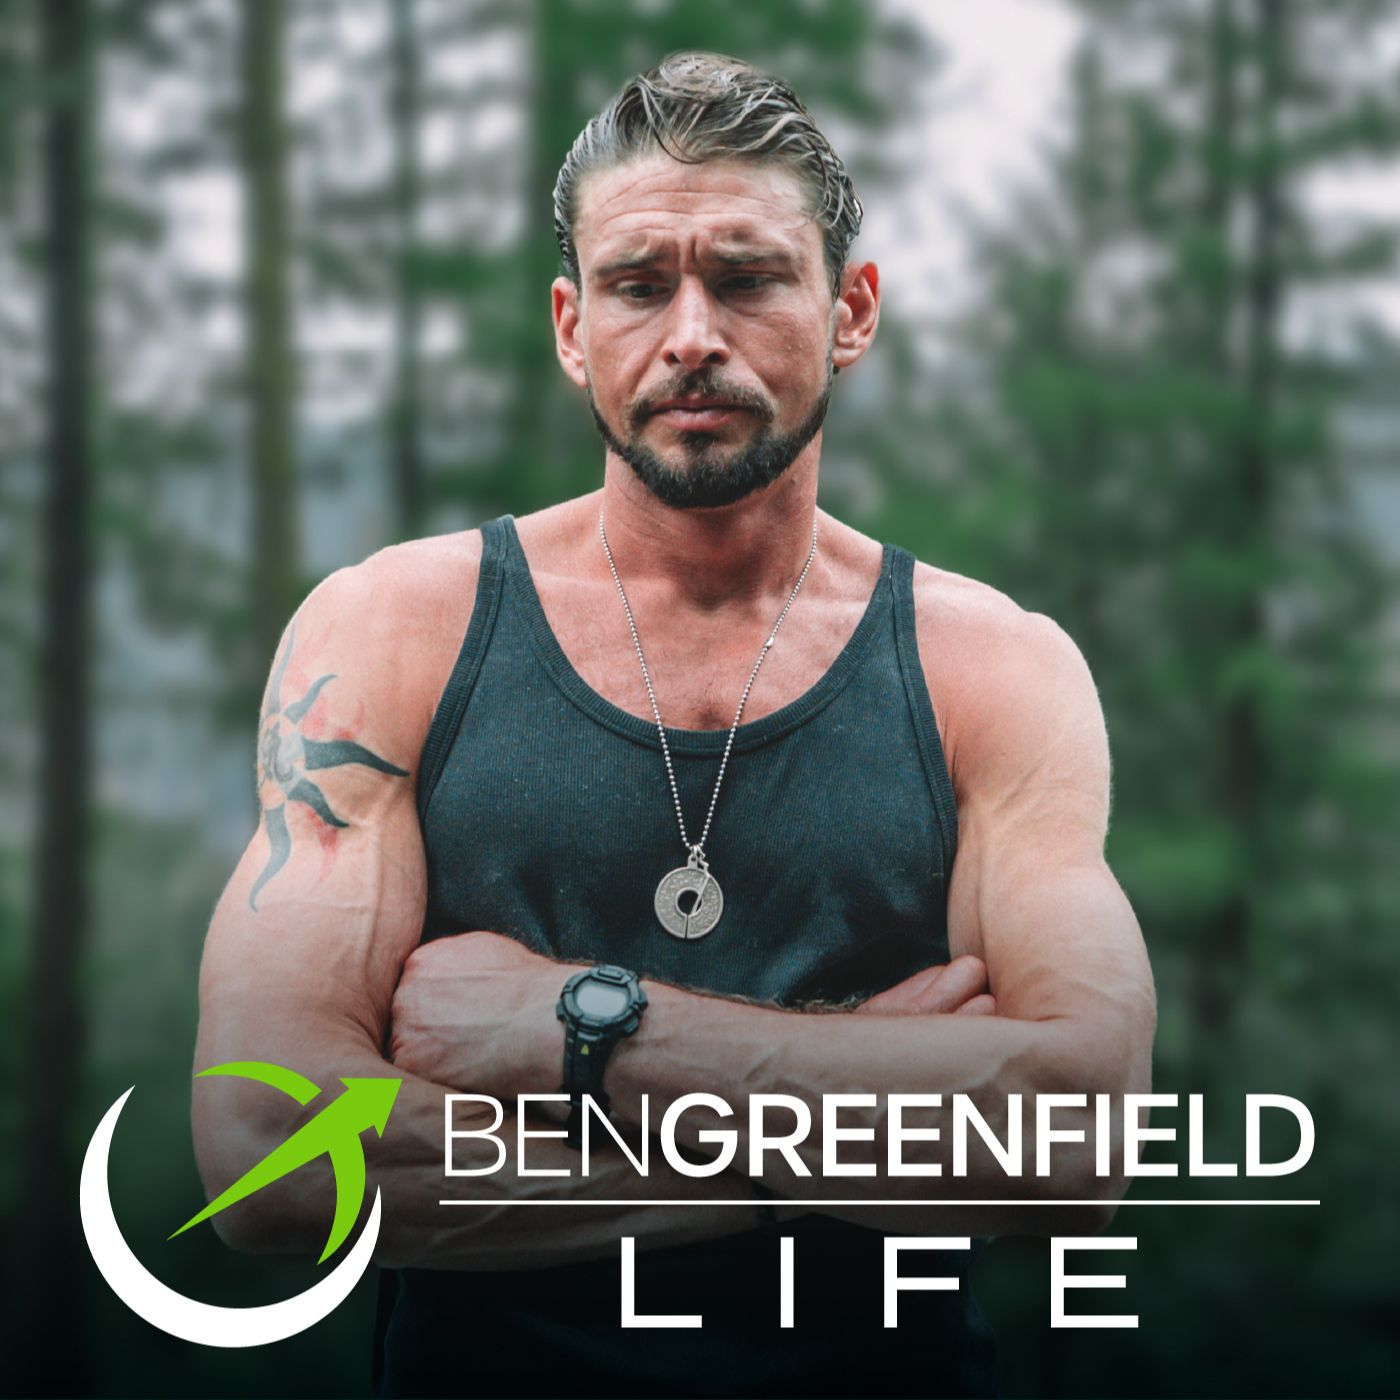 Ben Greenfield is Interviewed by Health & Wellness Expert, Christina Rice!